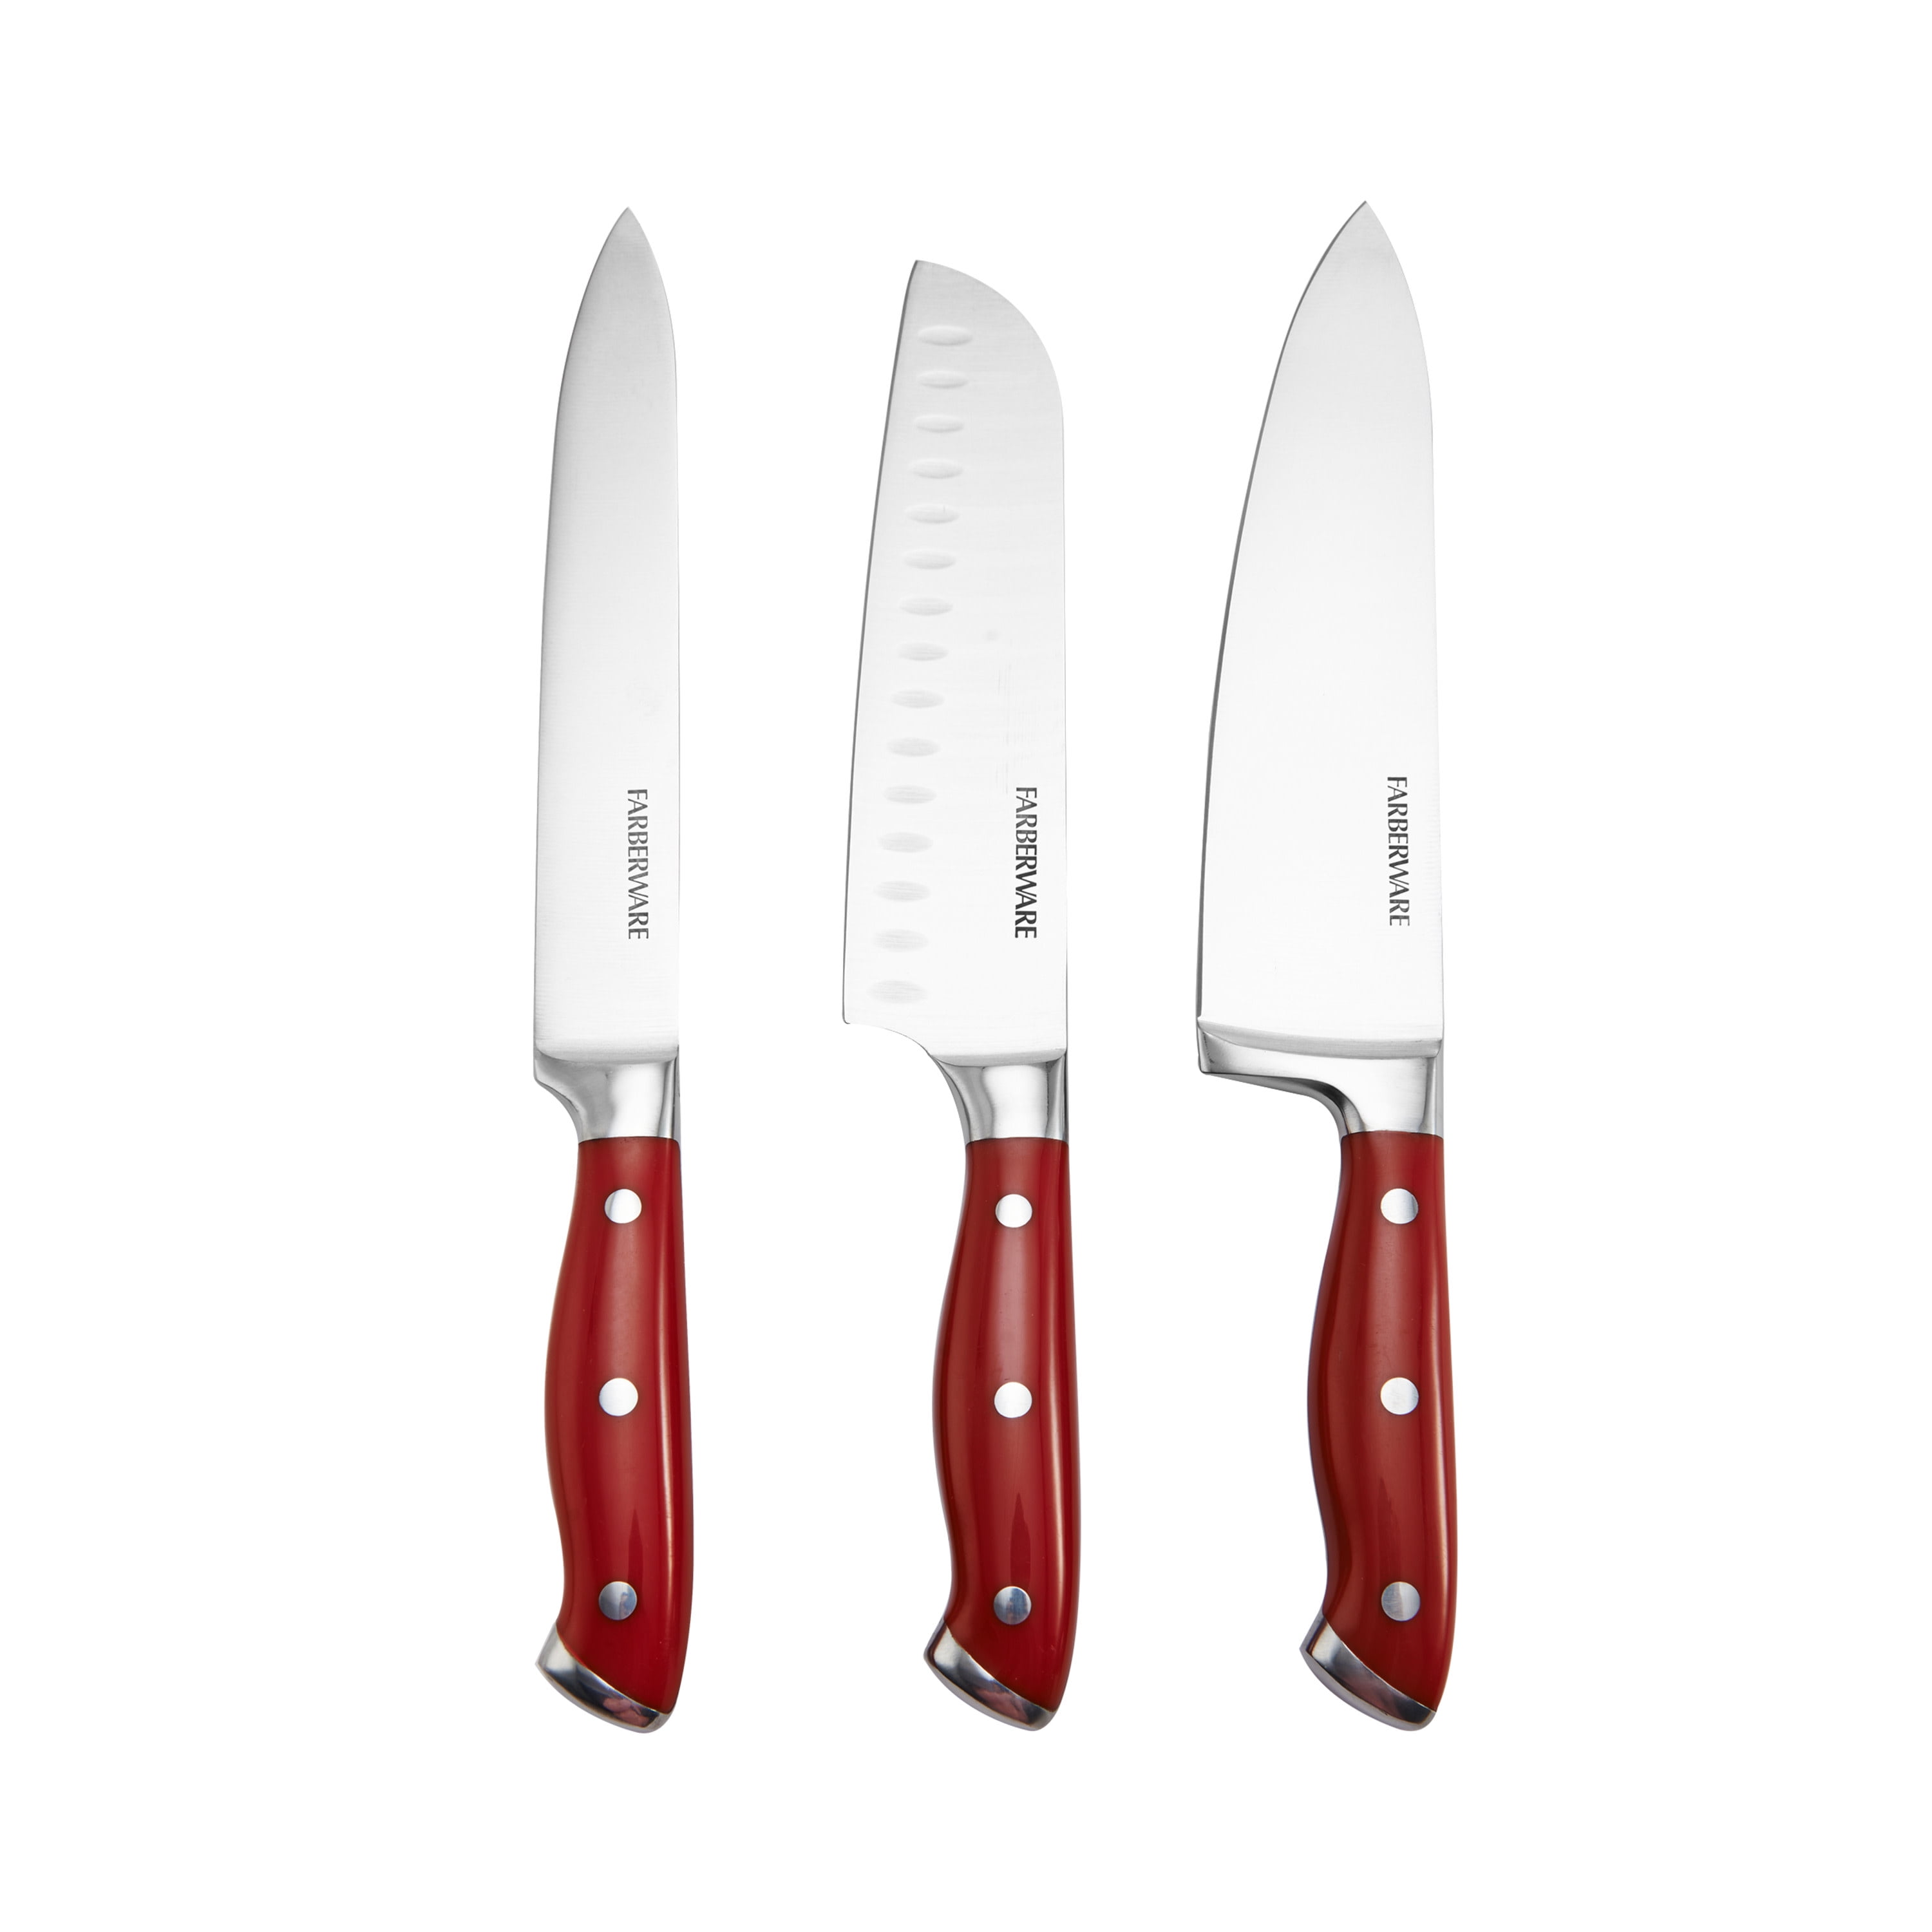 Farberware Edgekeeper 15-piece Stainless Steel Basic Red Knife Block Set  knife kitchen chef knife knives - AliExpress